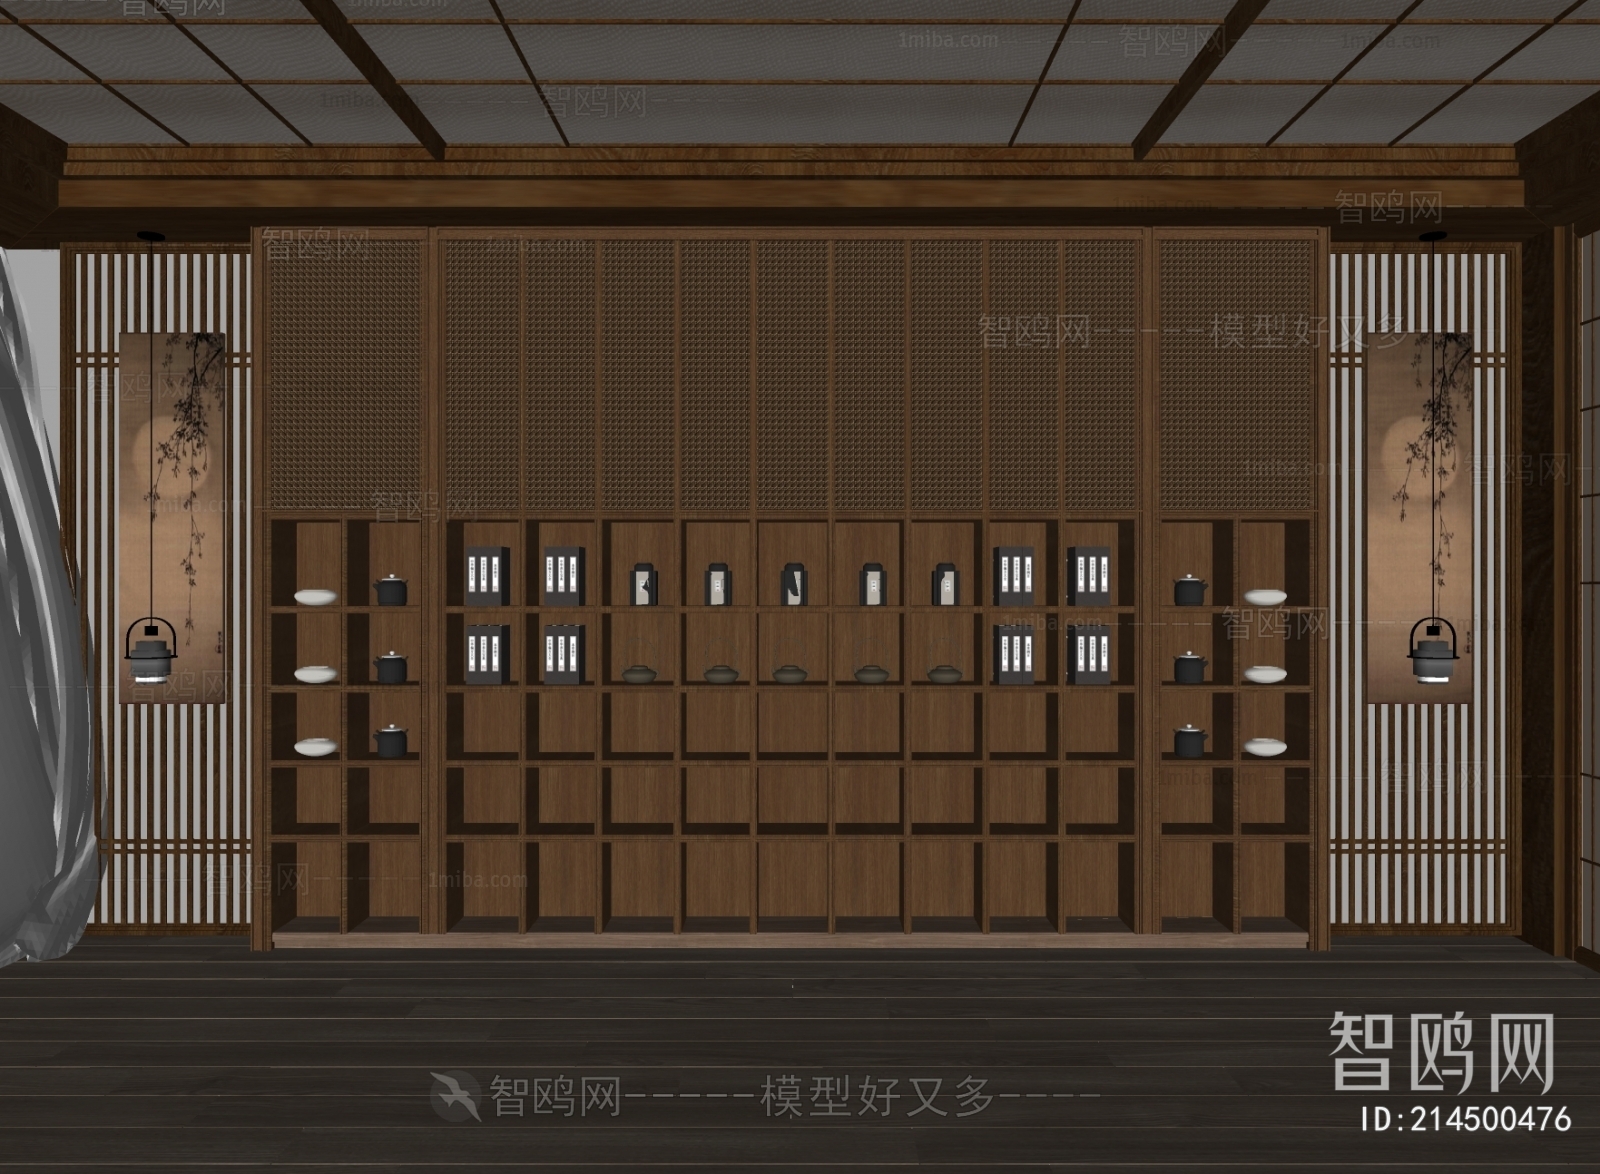 Japanese Style Decorative Cabinet